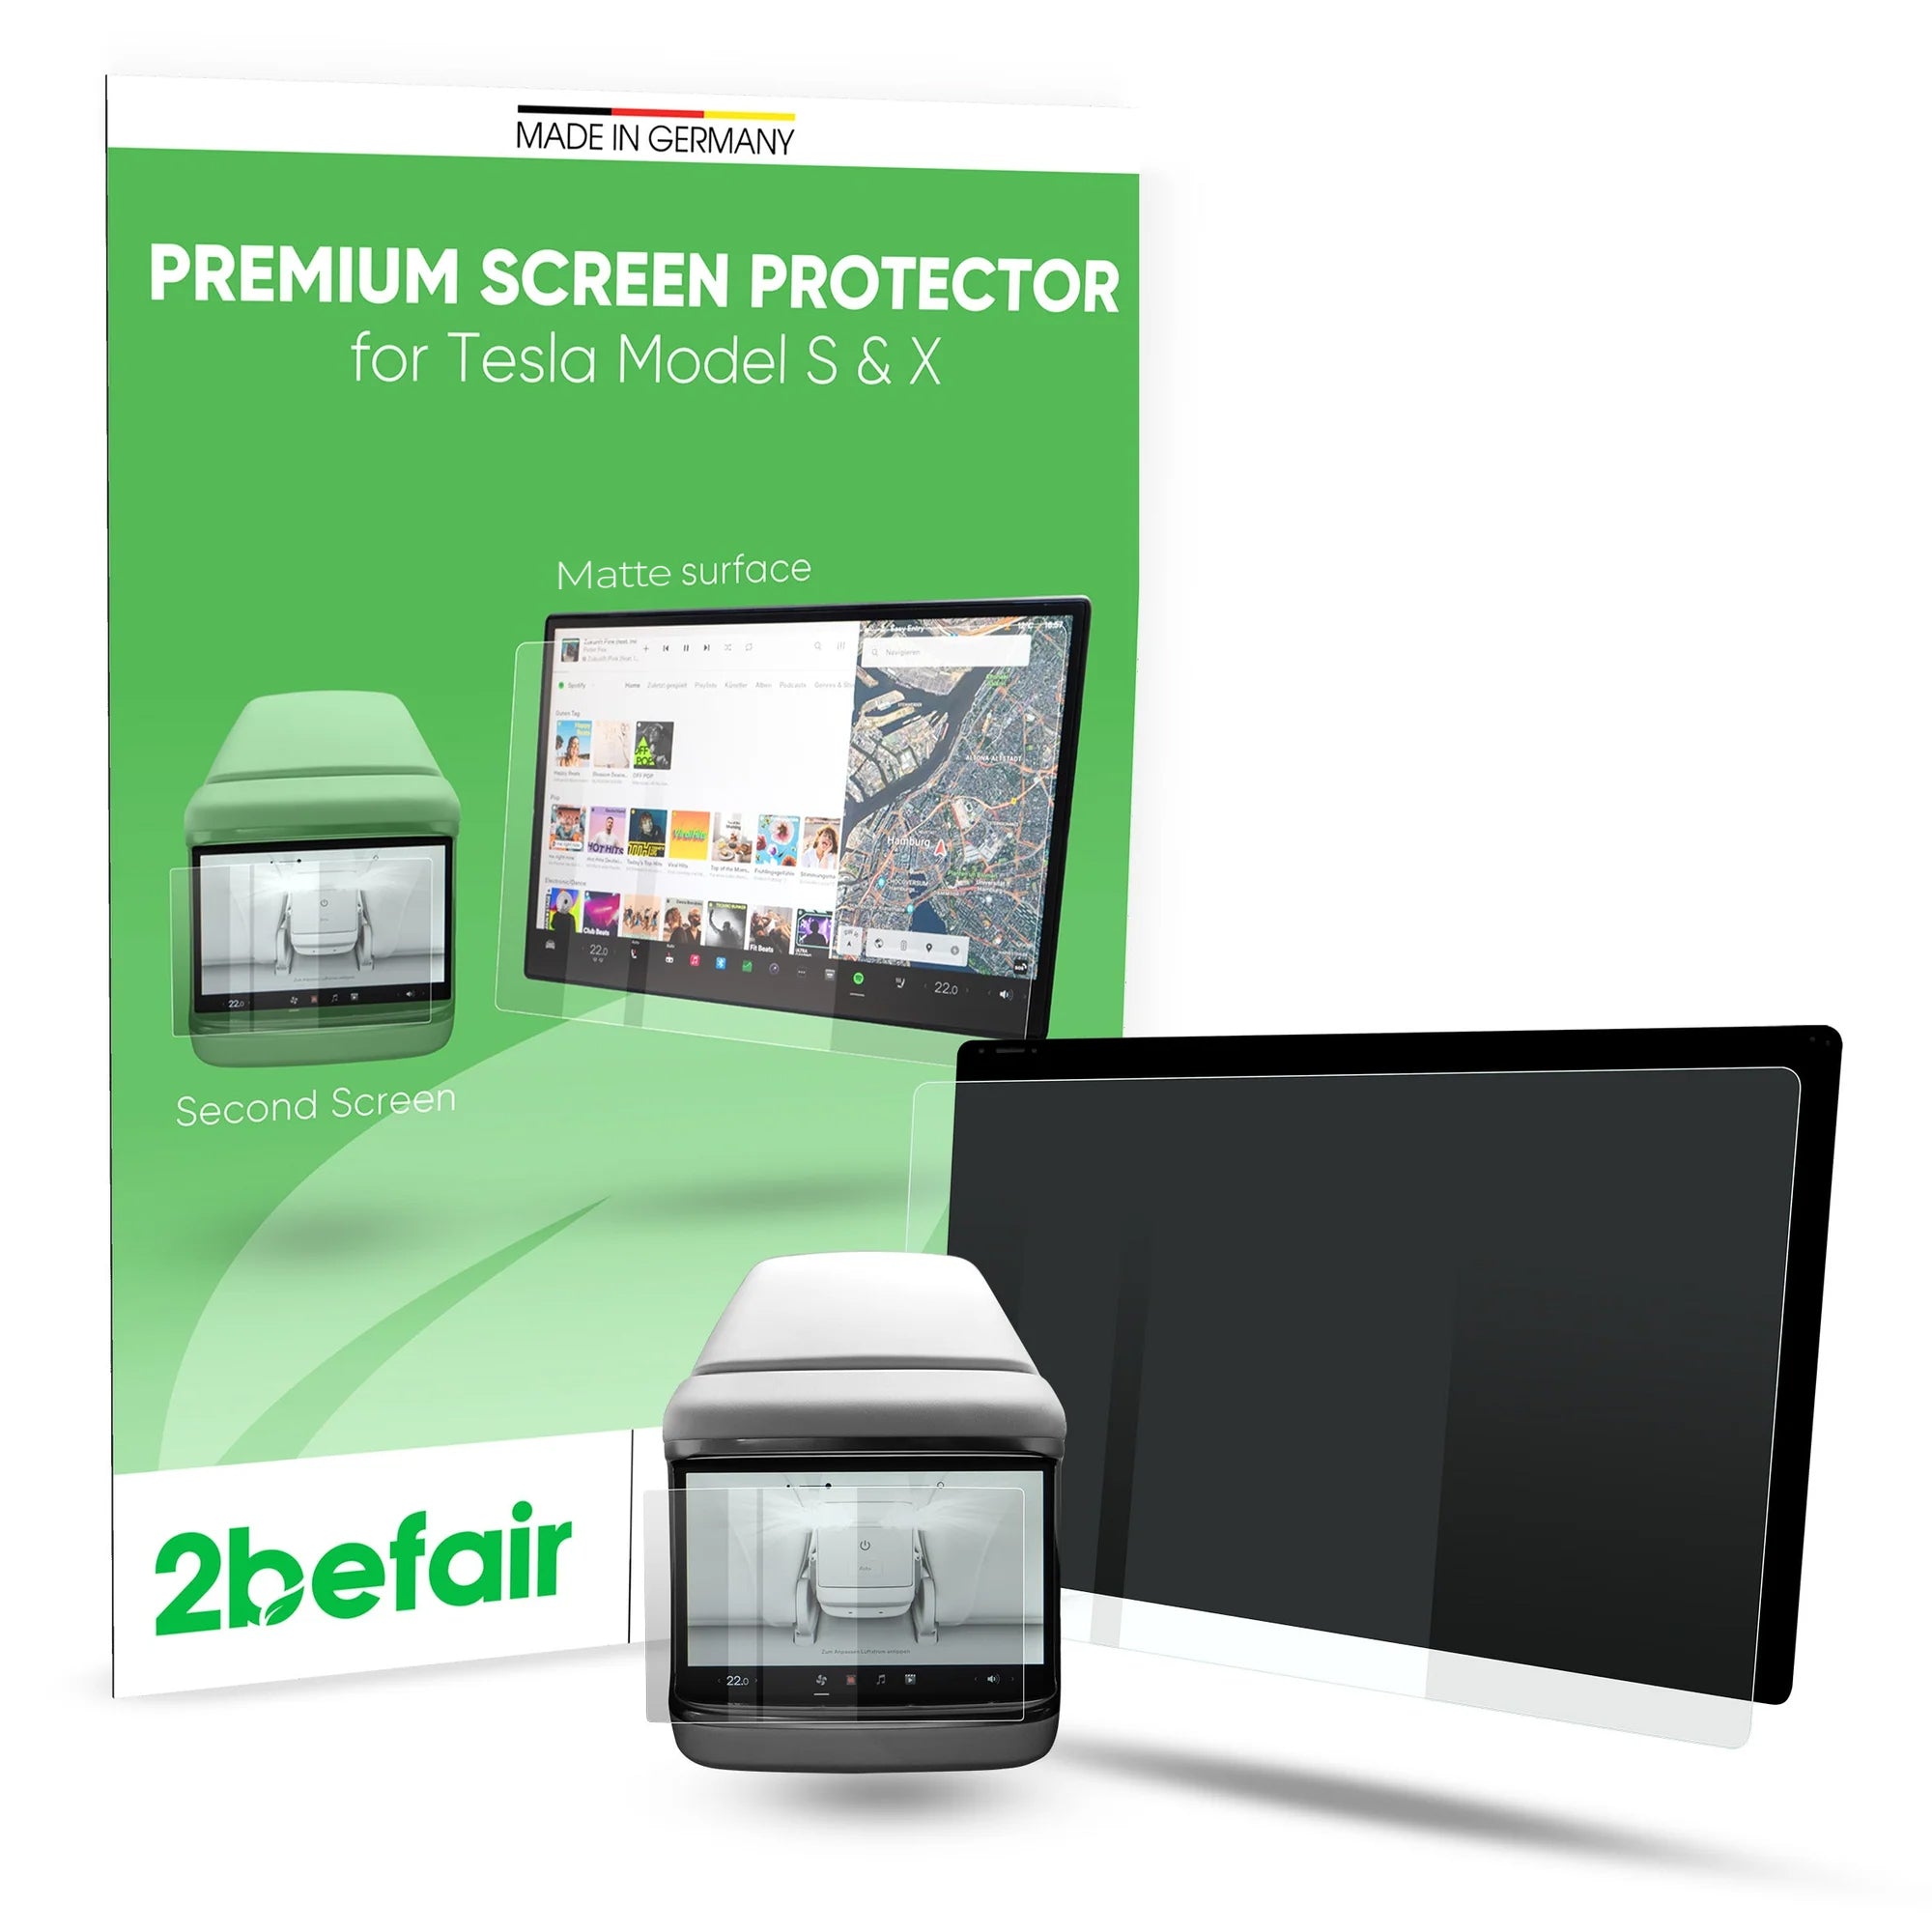 2befair screen protector set matt/clear for the Tesla Model S/X